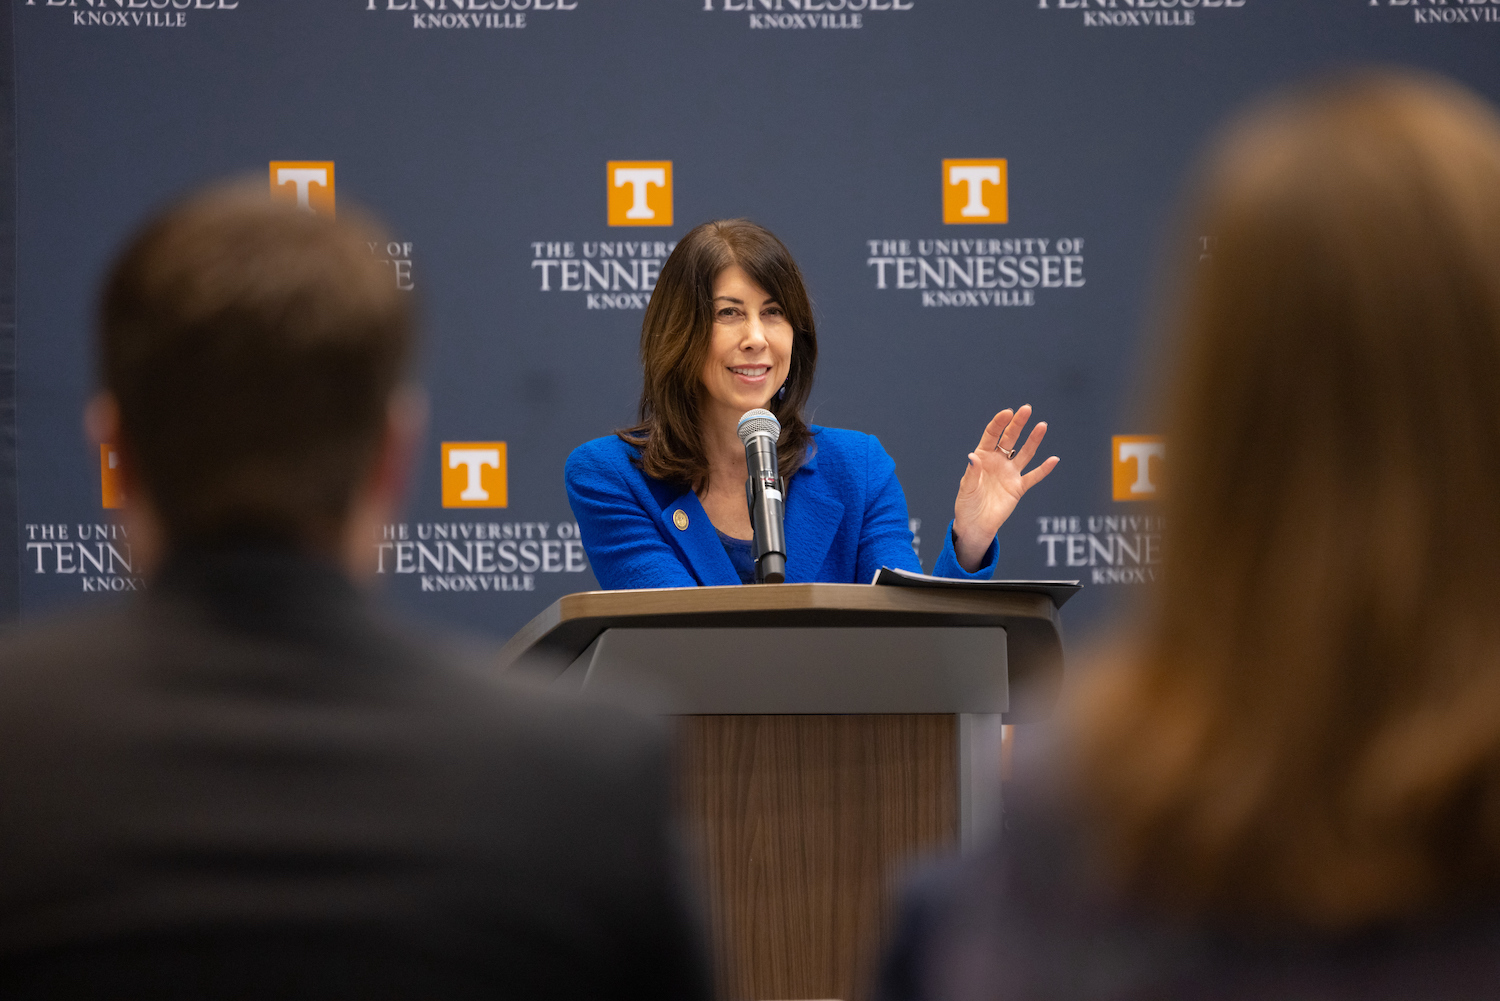 Dr. Nancy La Vigne, addresses a group at University of Tennessee